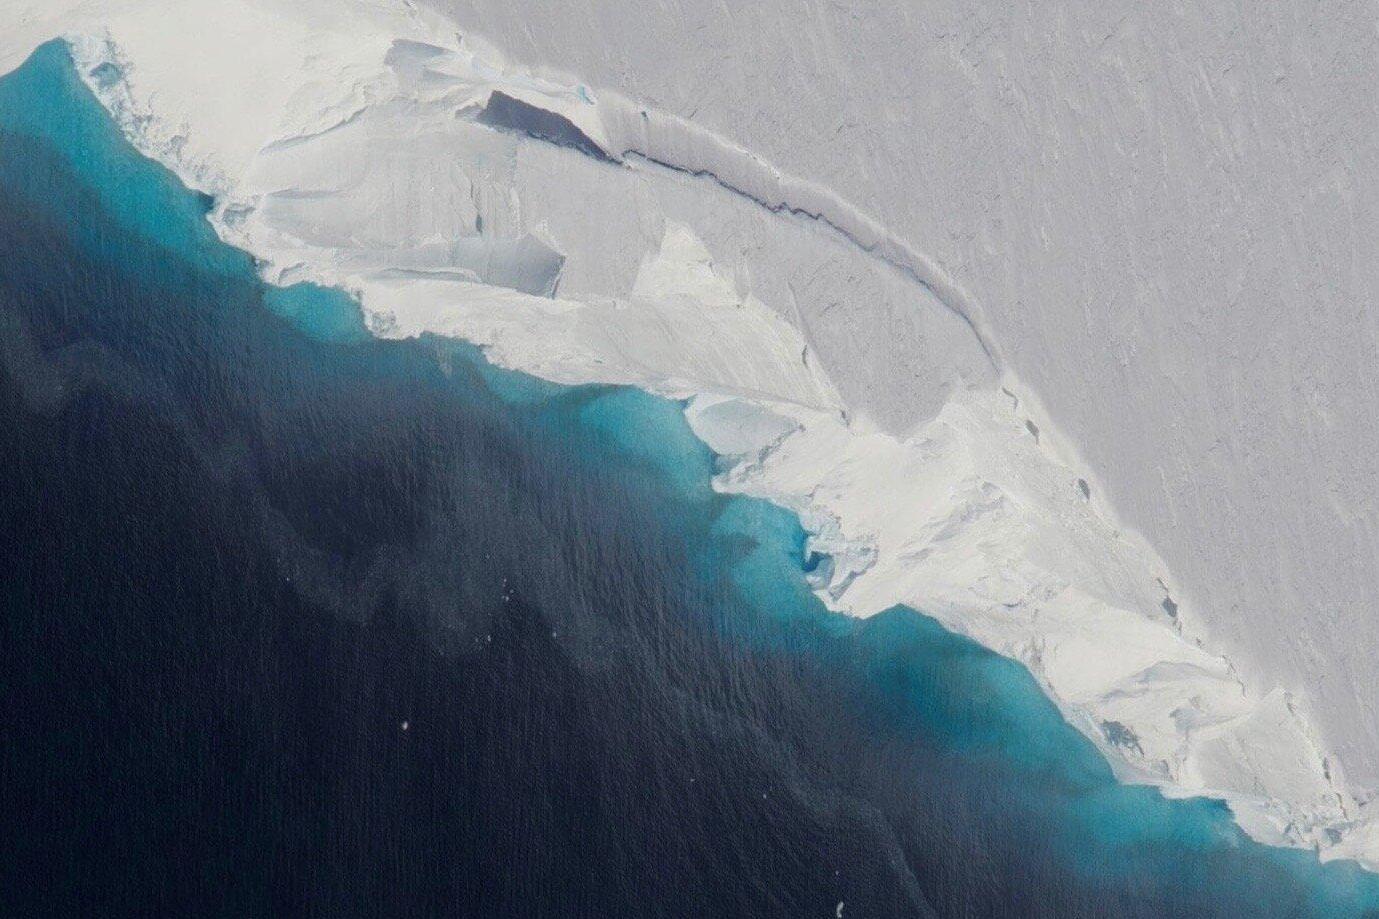 The Thwaites Glacier, West Antarctica